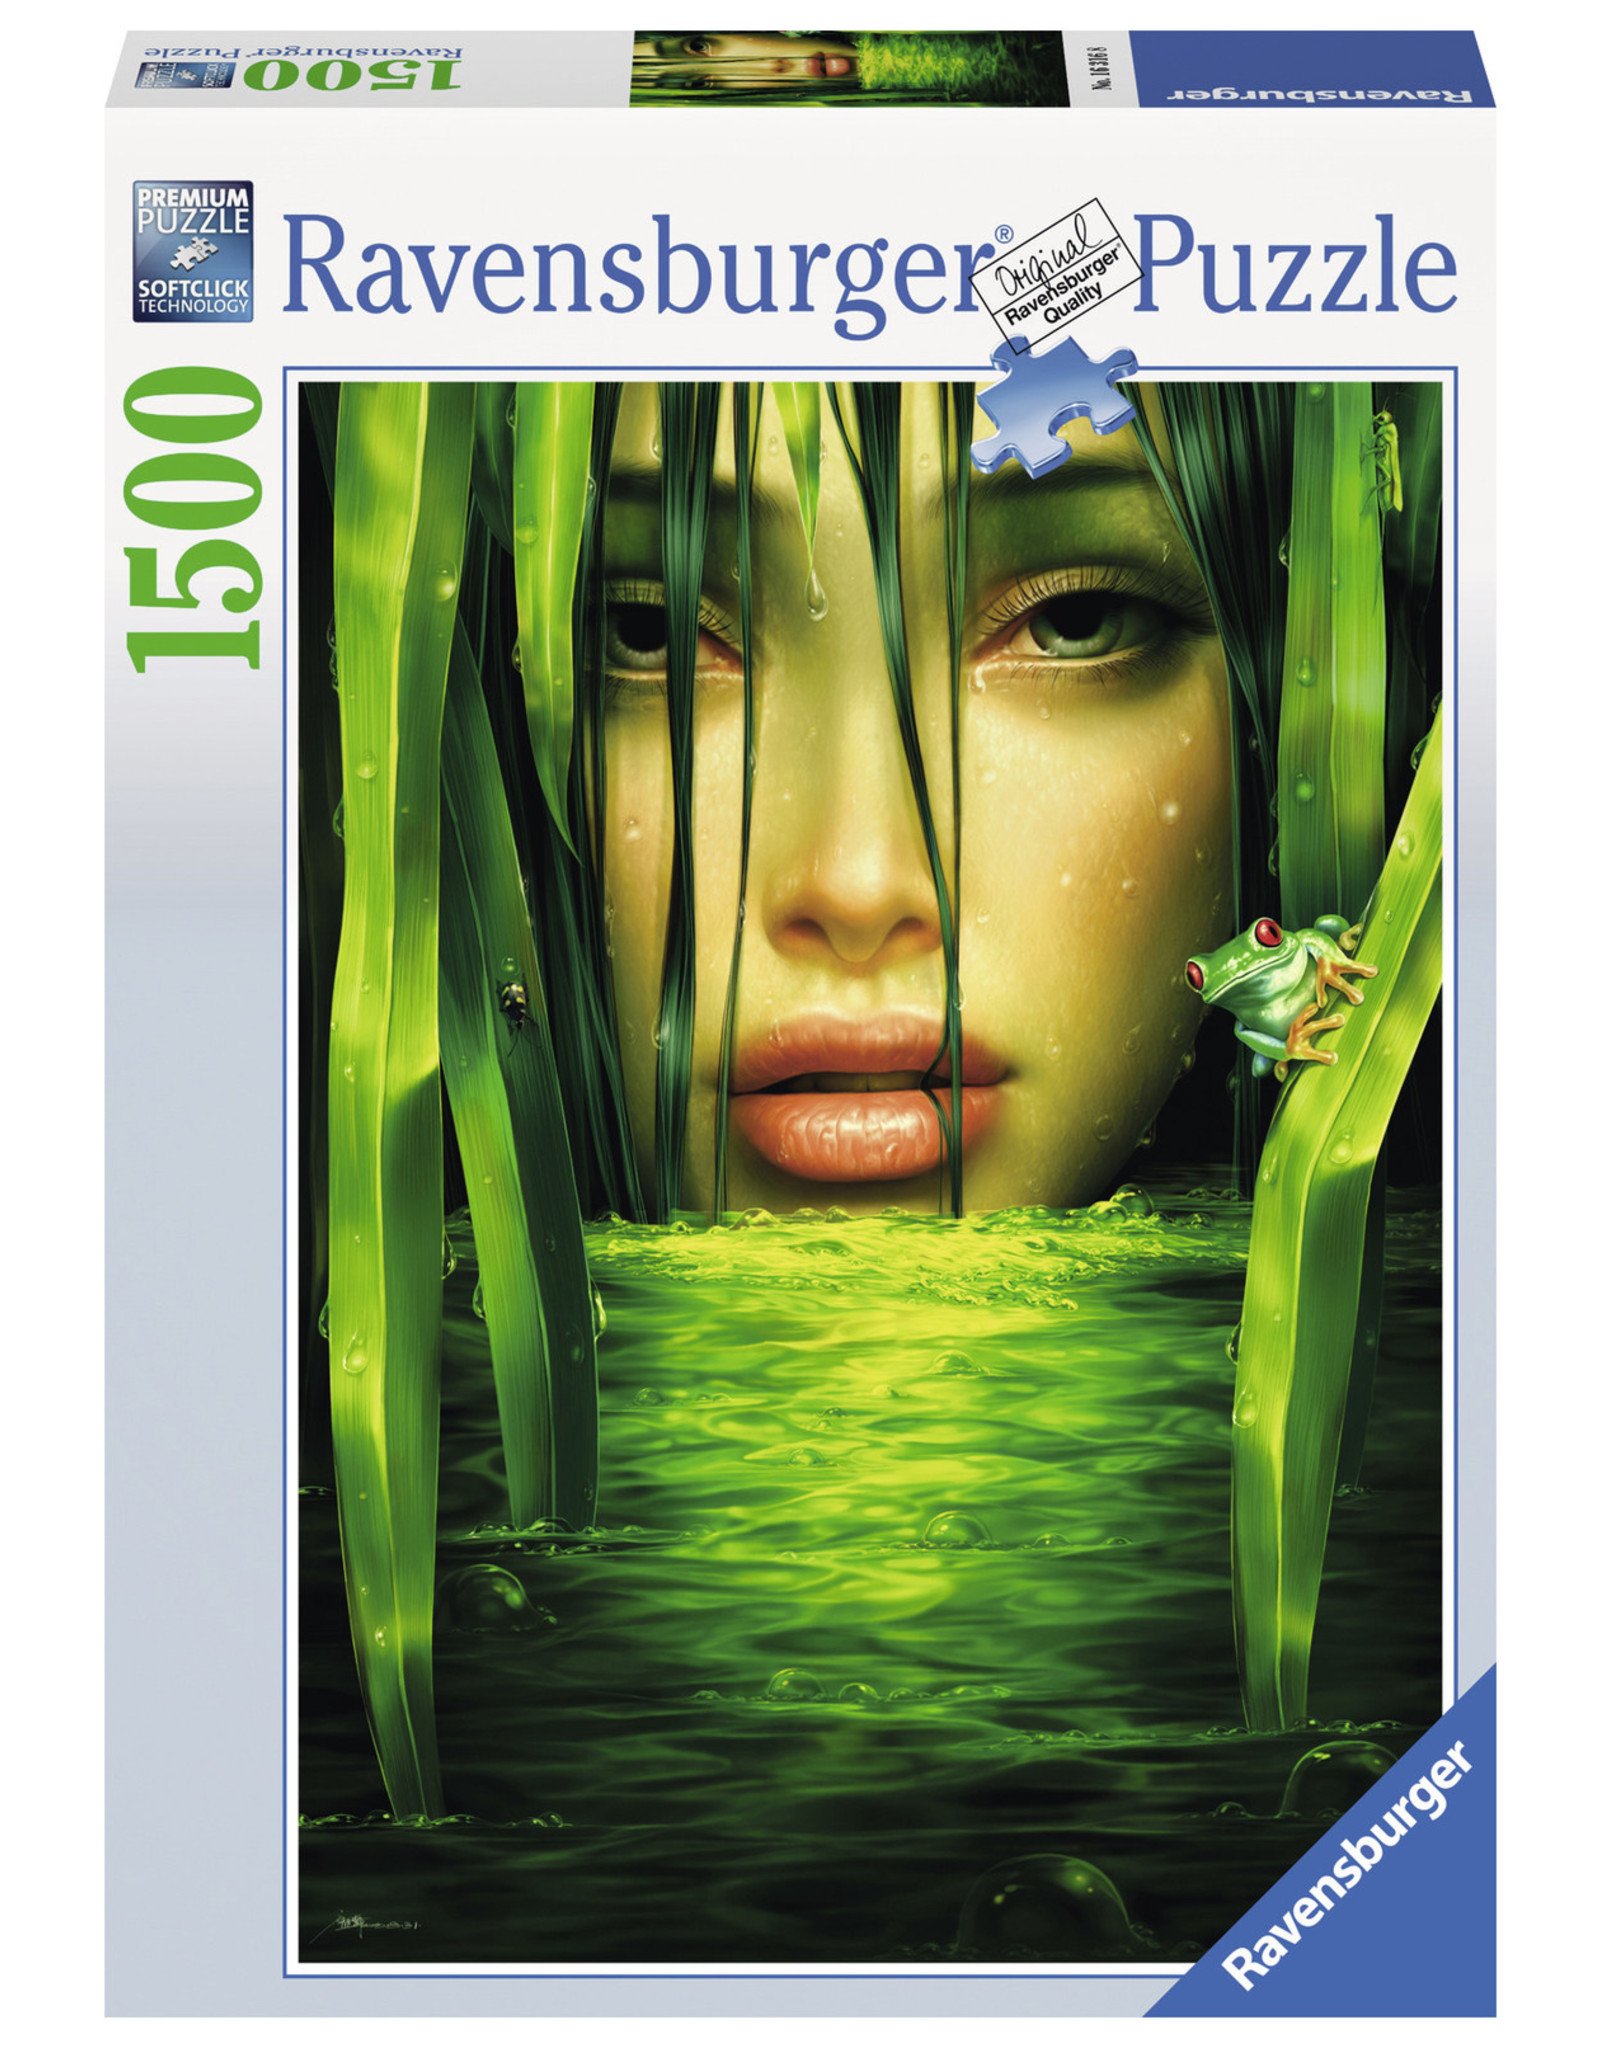 Ravensburger Ravensburgerpuzzel 163168 Fantasy - 1500 stukjes